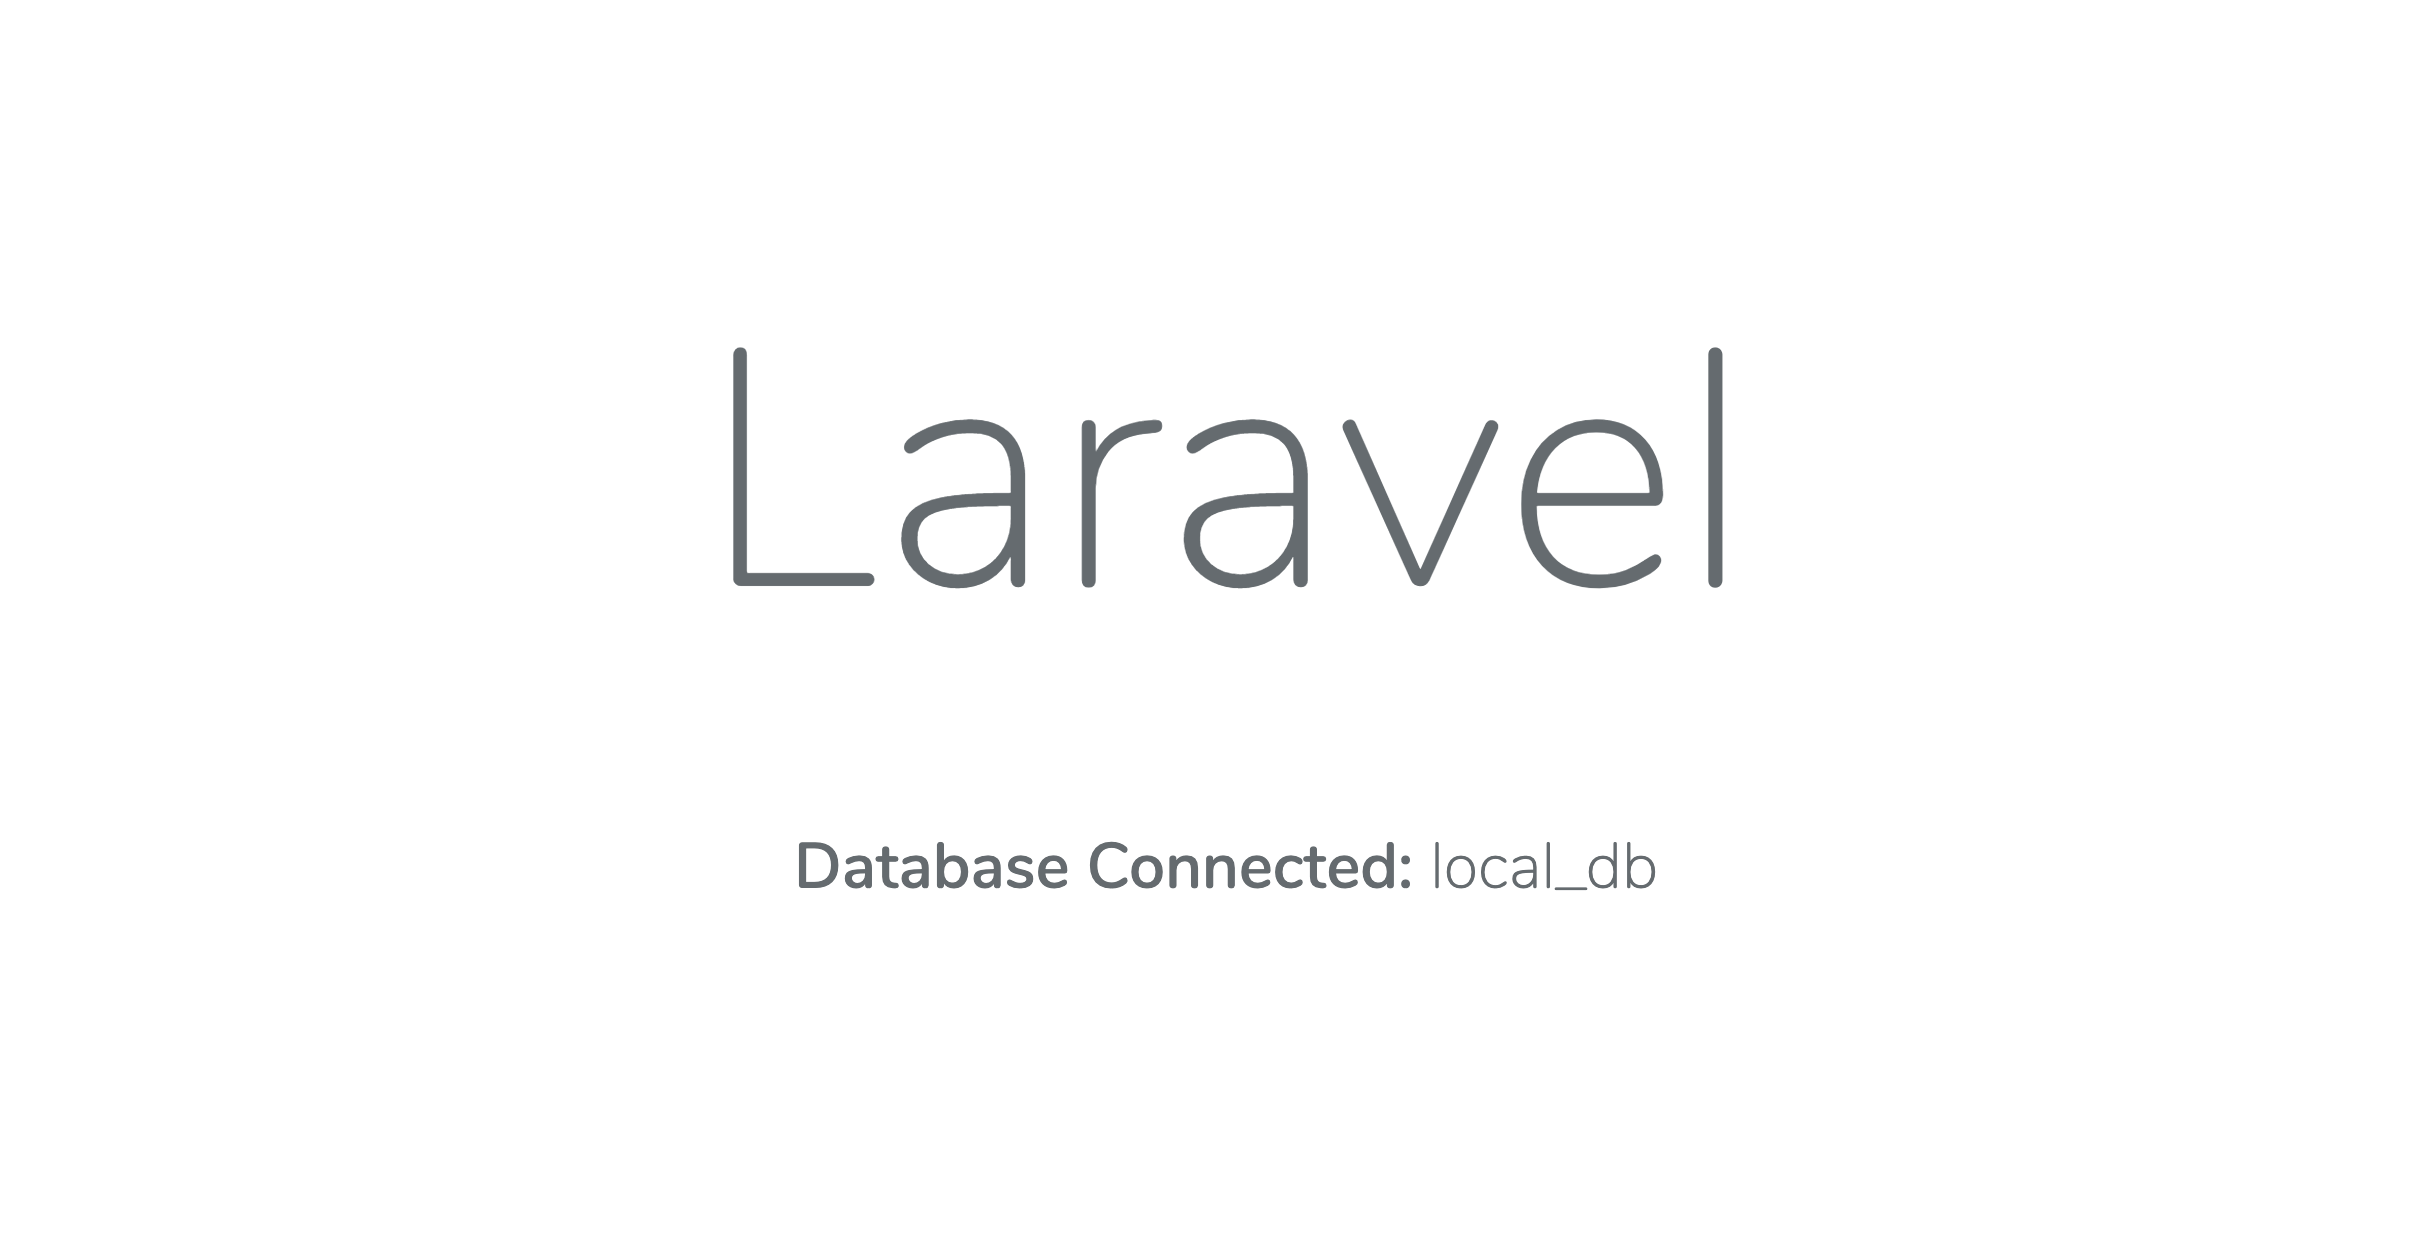 The Laravel application running locally using Docker Compose